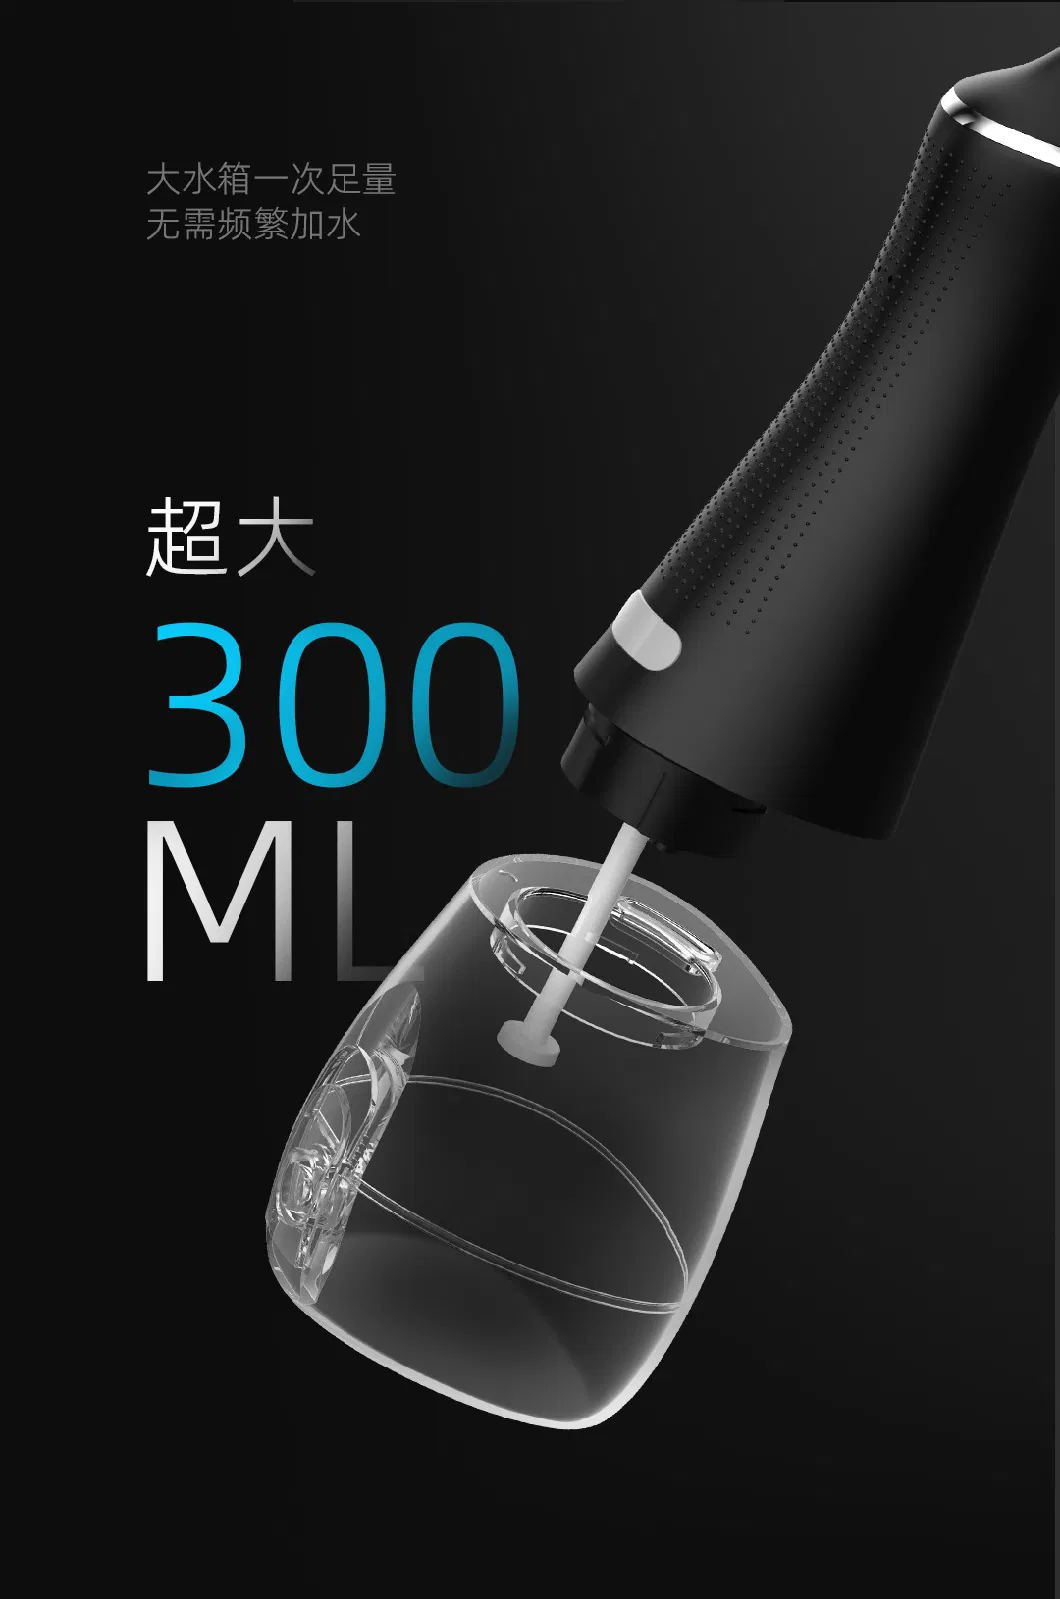 300ml Water Flosser Portable Dental Floss Oral Irrigator